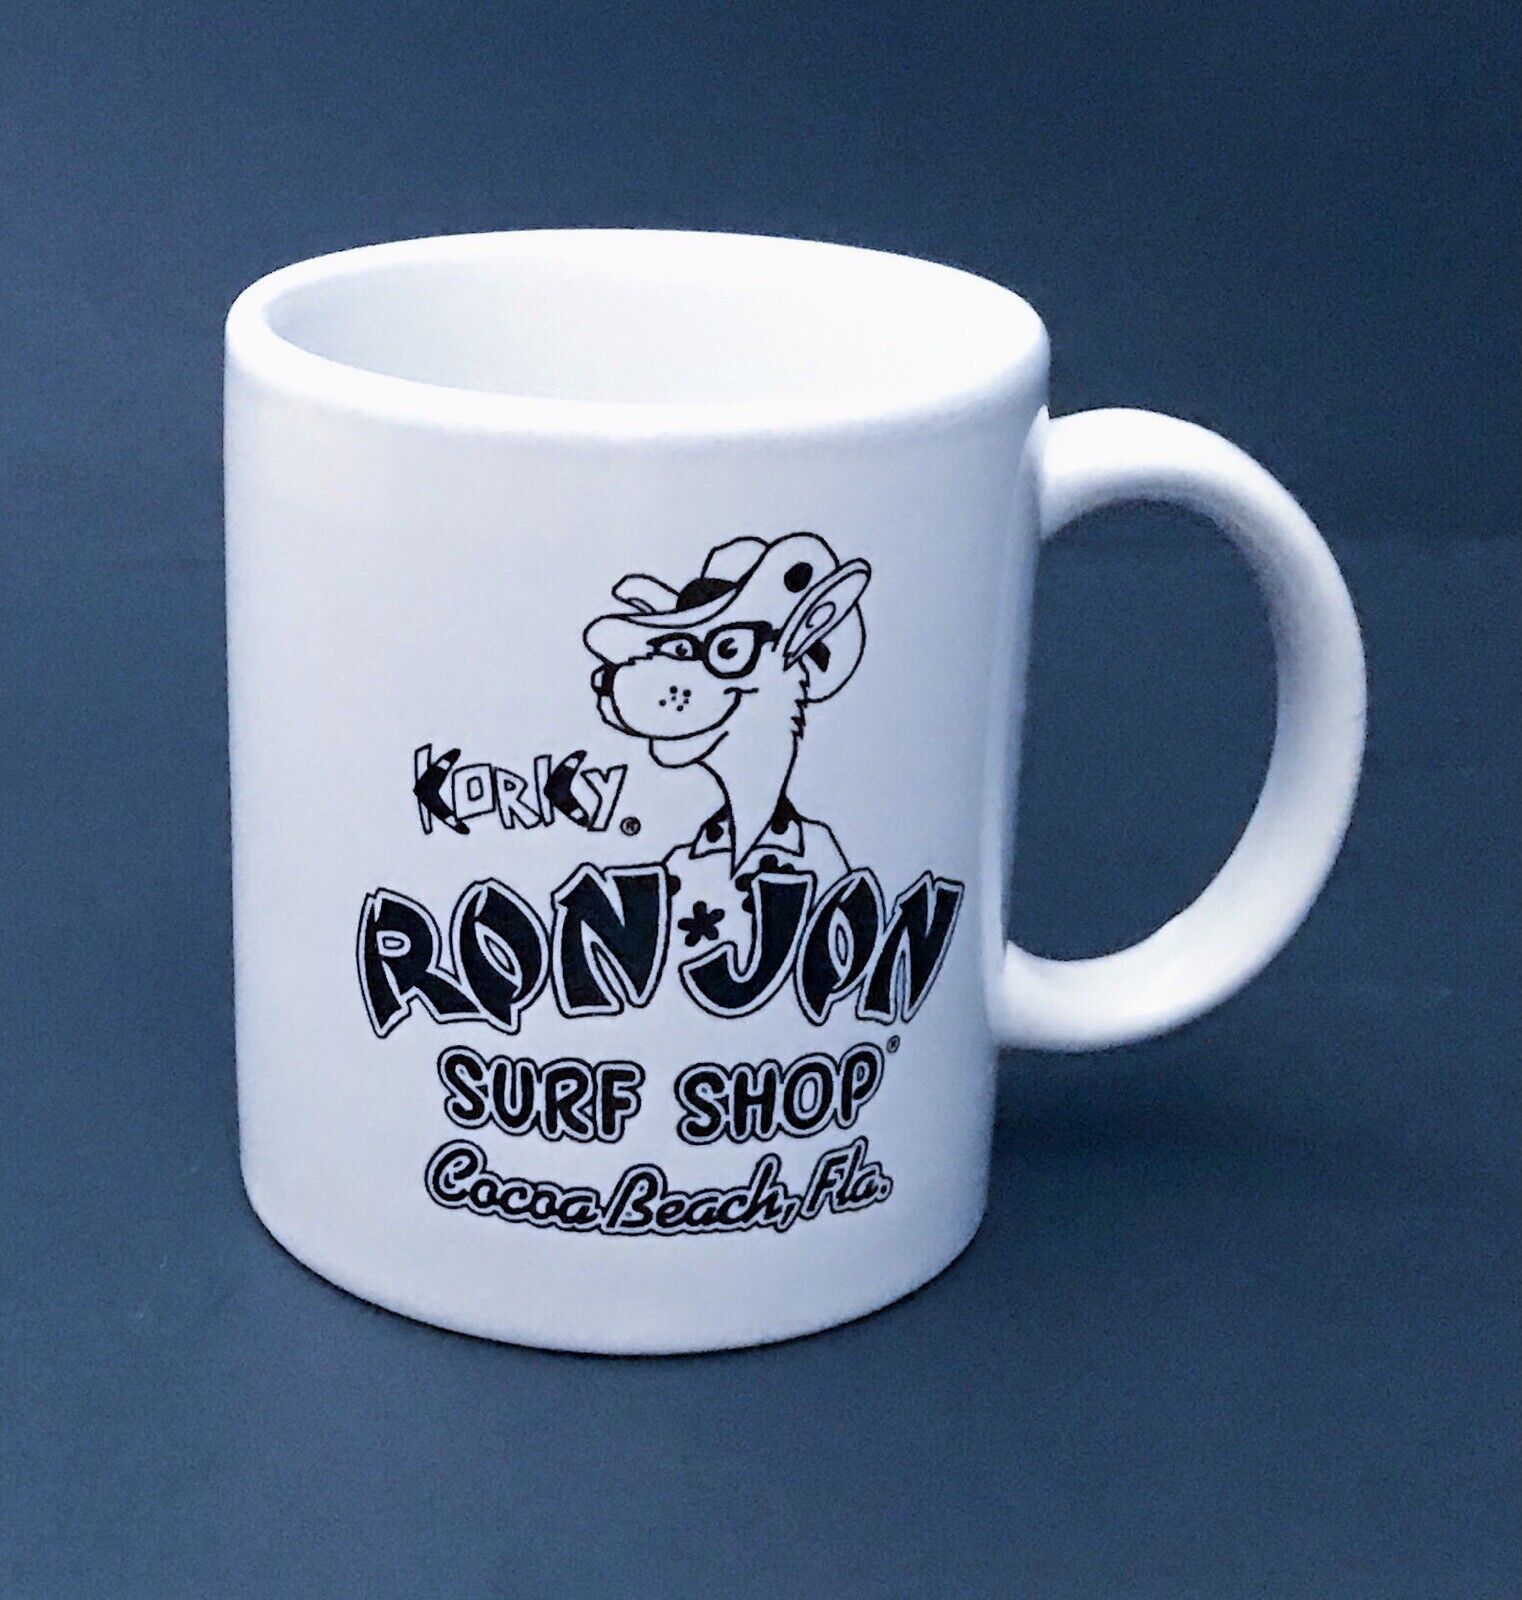 Vintage Ron Jon Surf Shop Surf Cruiser Korky Cocoa Beach Florida Mug Coffee Cup 